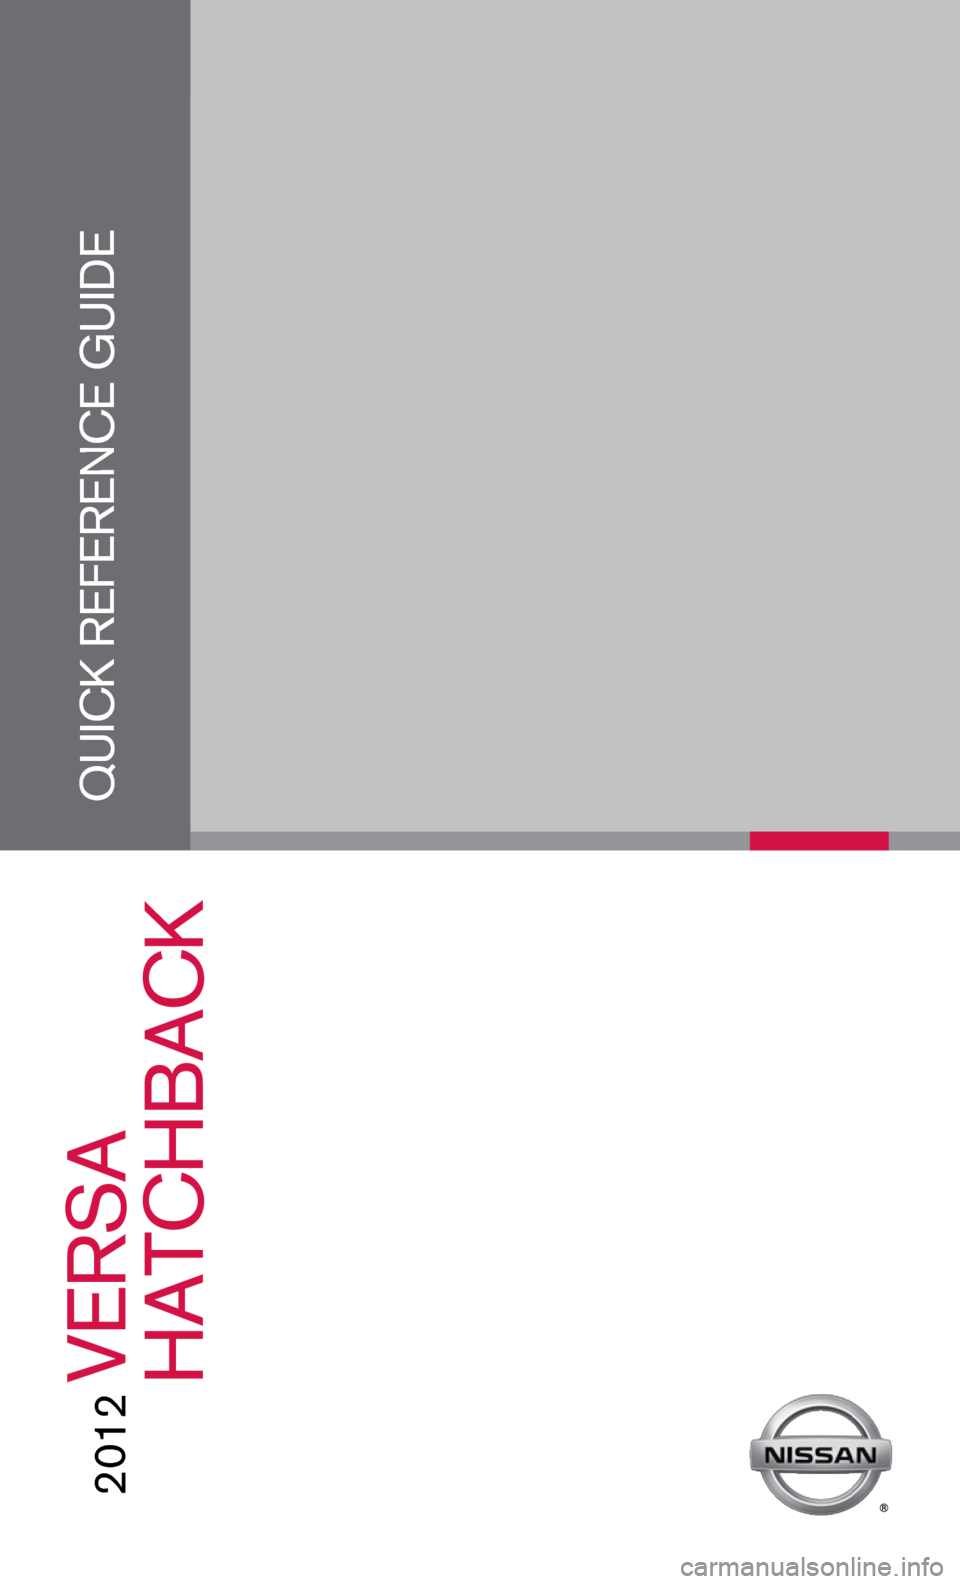 NISSAN VERSA HATCHBACK 2012 1.G Quick Reference Guide Quick RefeRence Guide
        2012
 VeRSA 
          hAtchbAck  